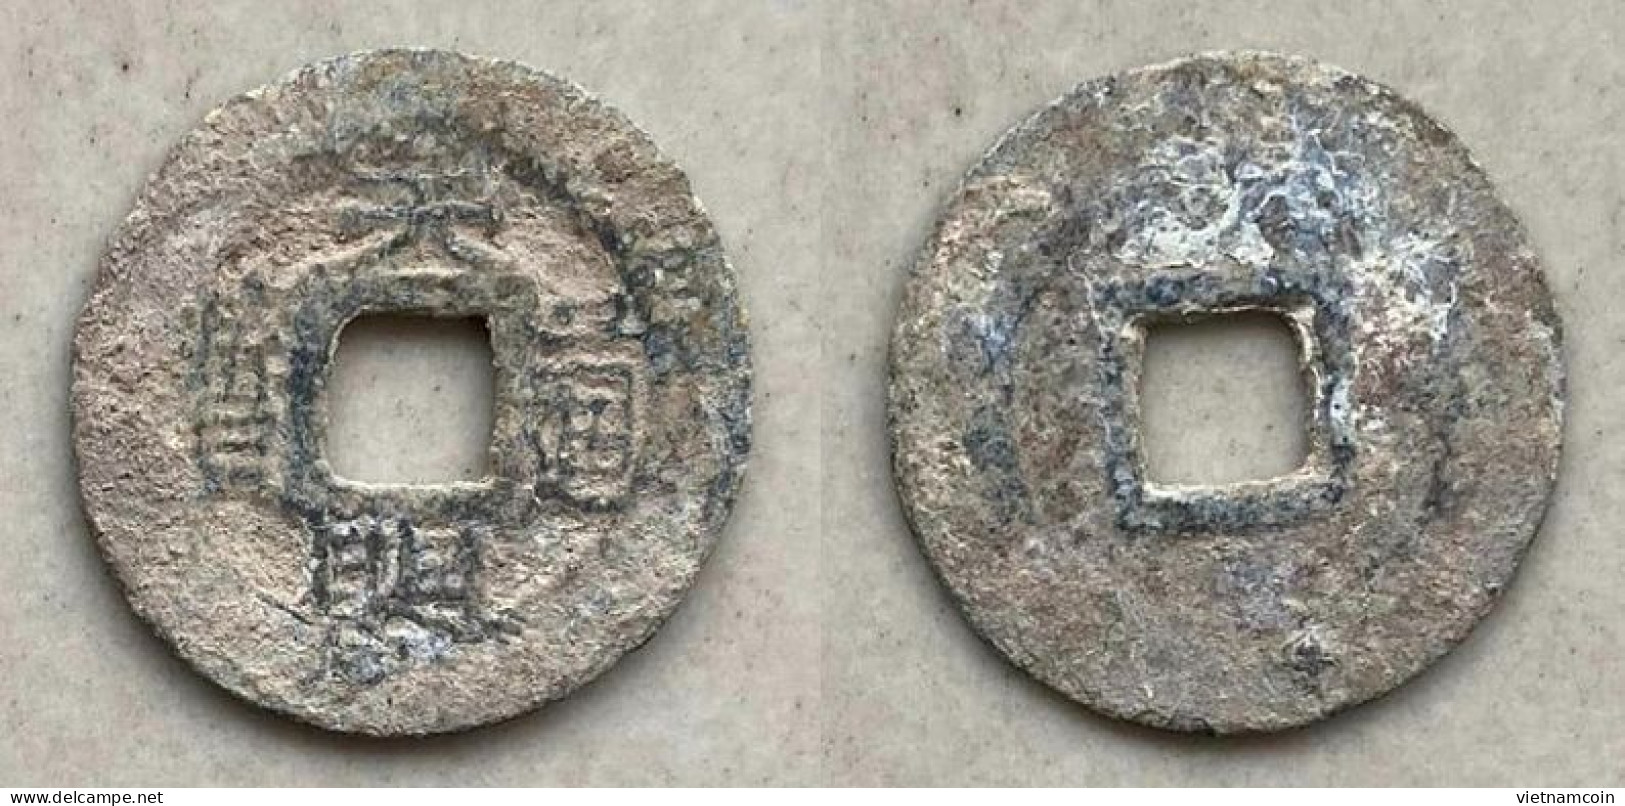 Ancient Annam Coin  Thien Minh Thong Bao (zinc Coin) THE NGUYEN LORDS (1558-1778) - Vietnam